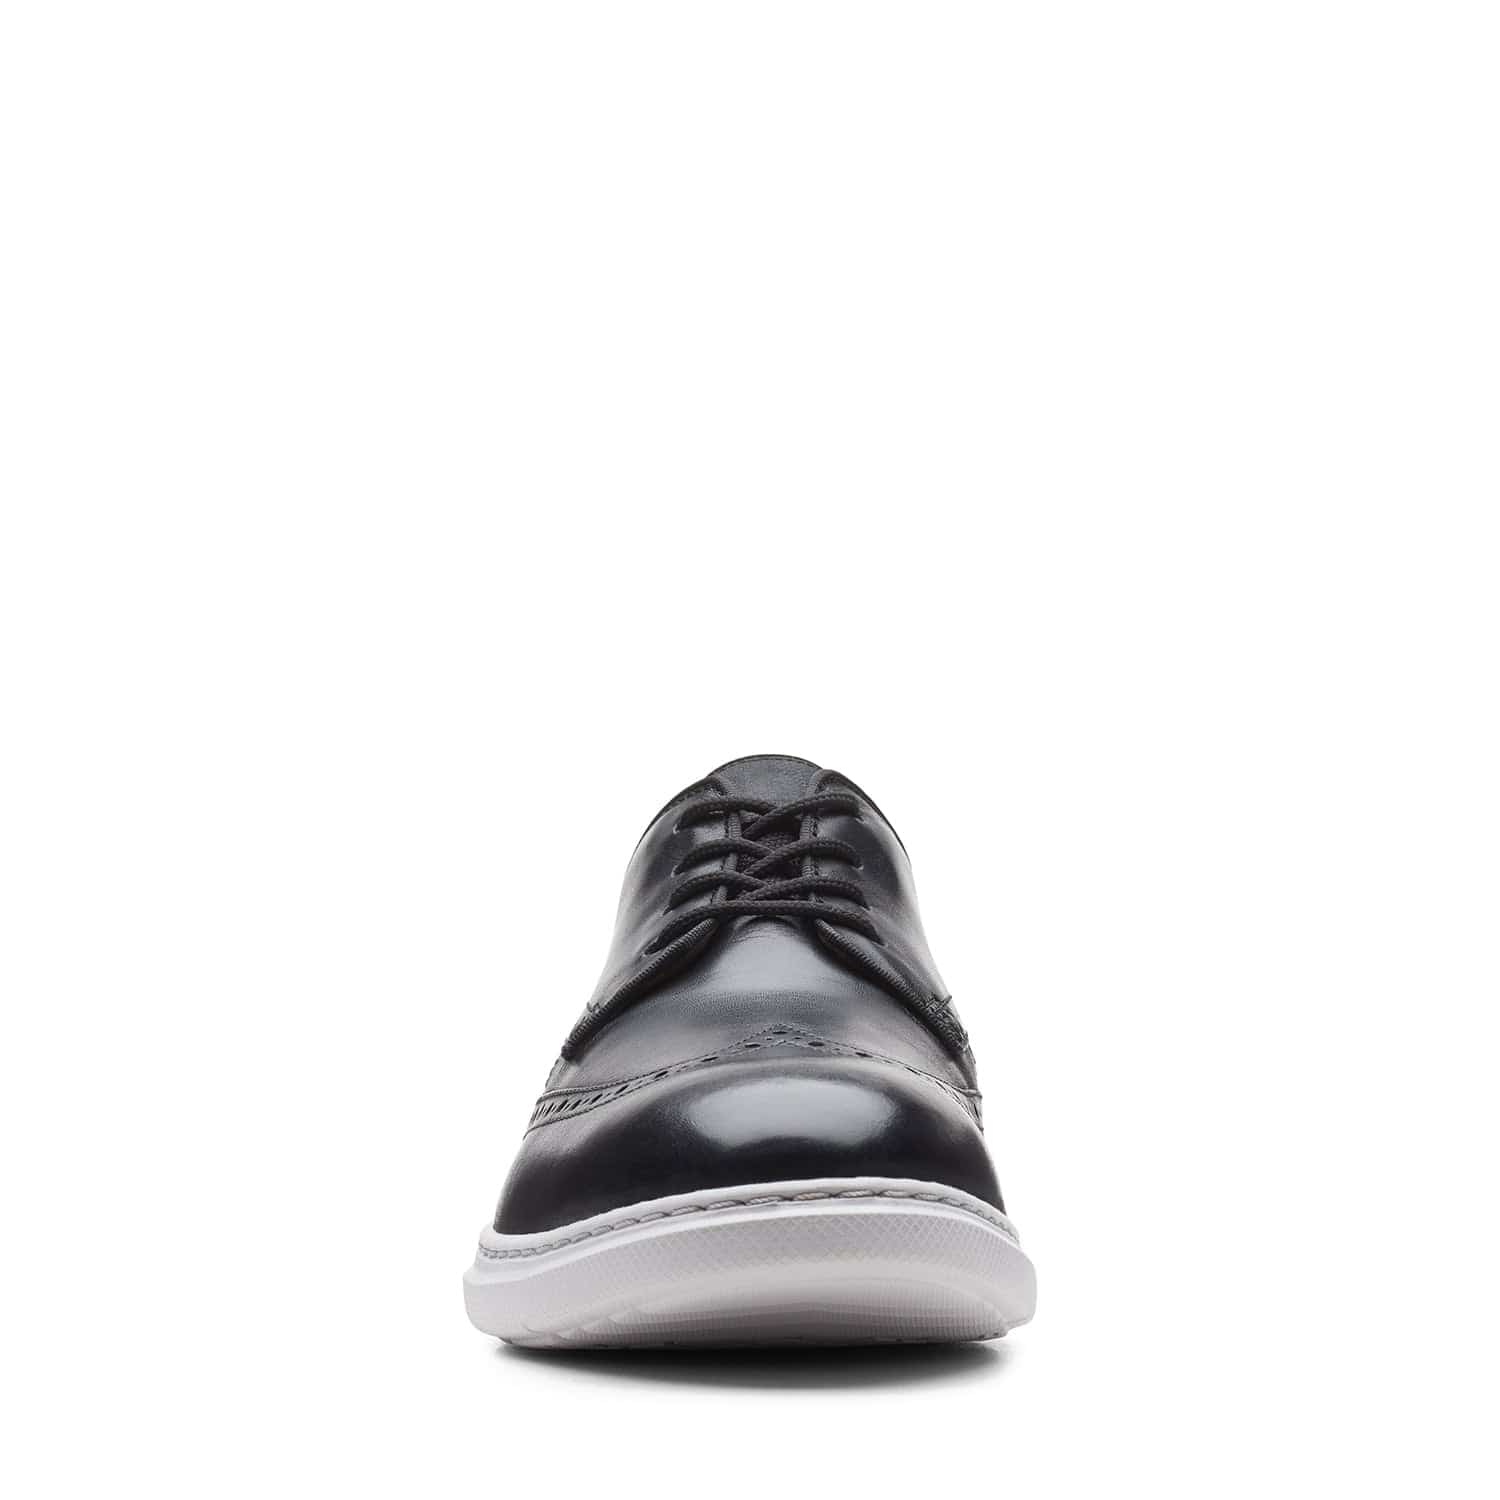 Clarks Dennet Wing Shoes - Black Leather - 261629107 - G Width (Standard Fit)